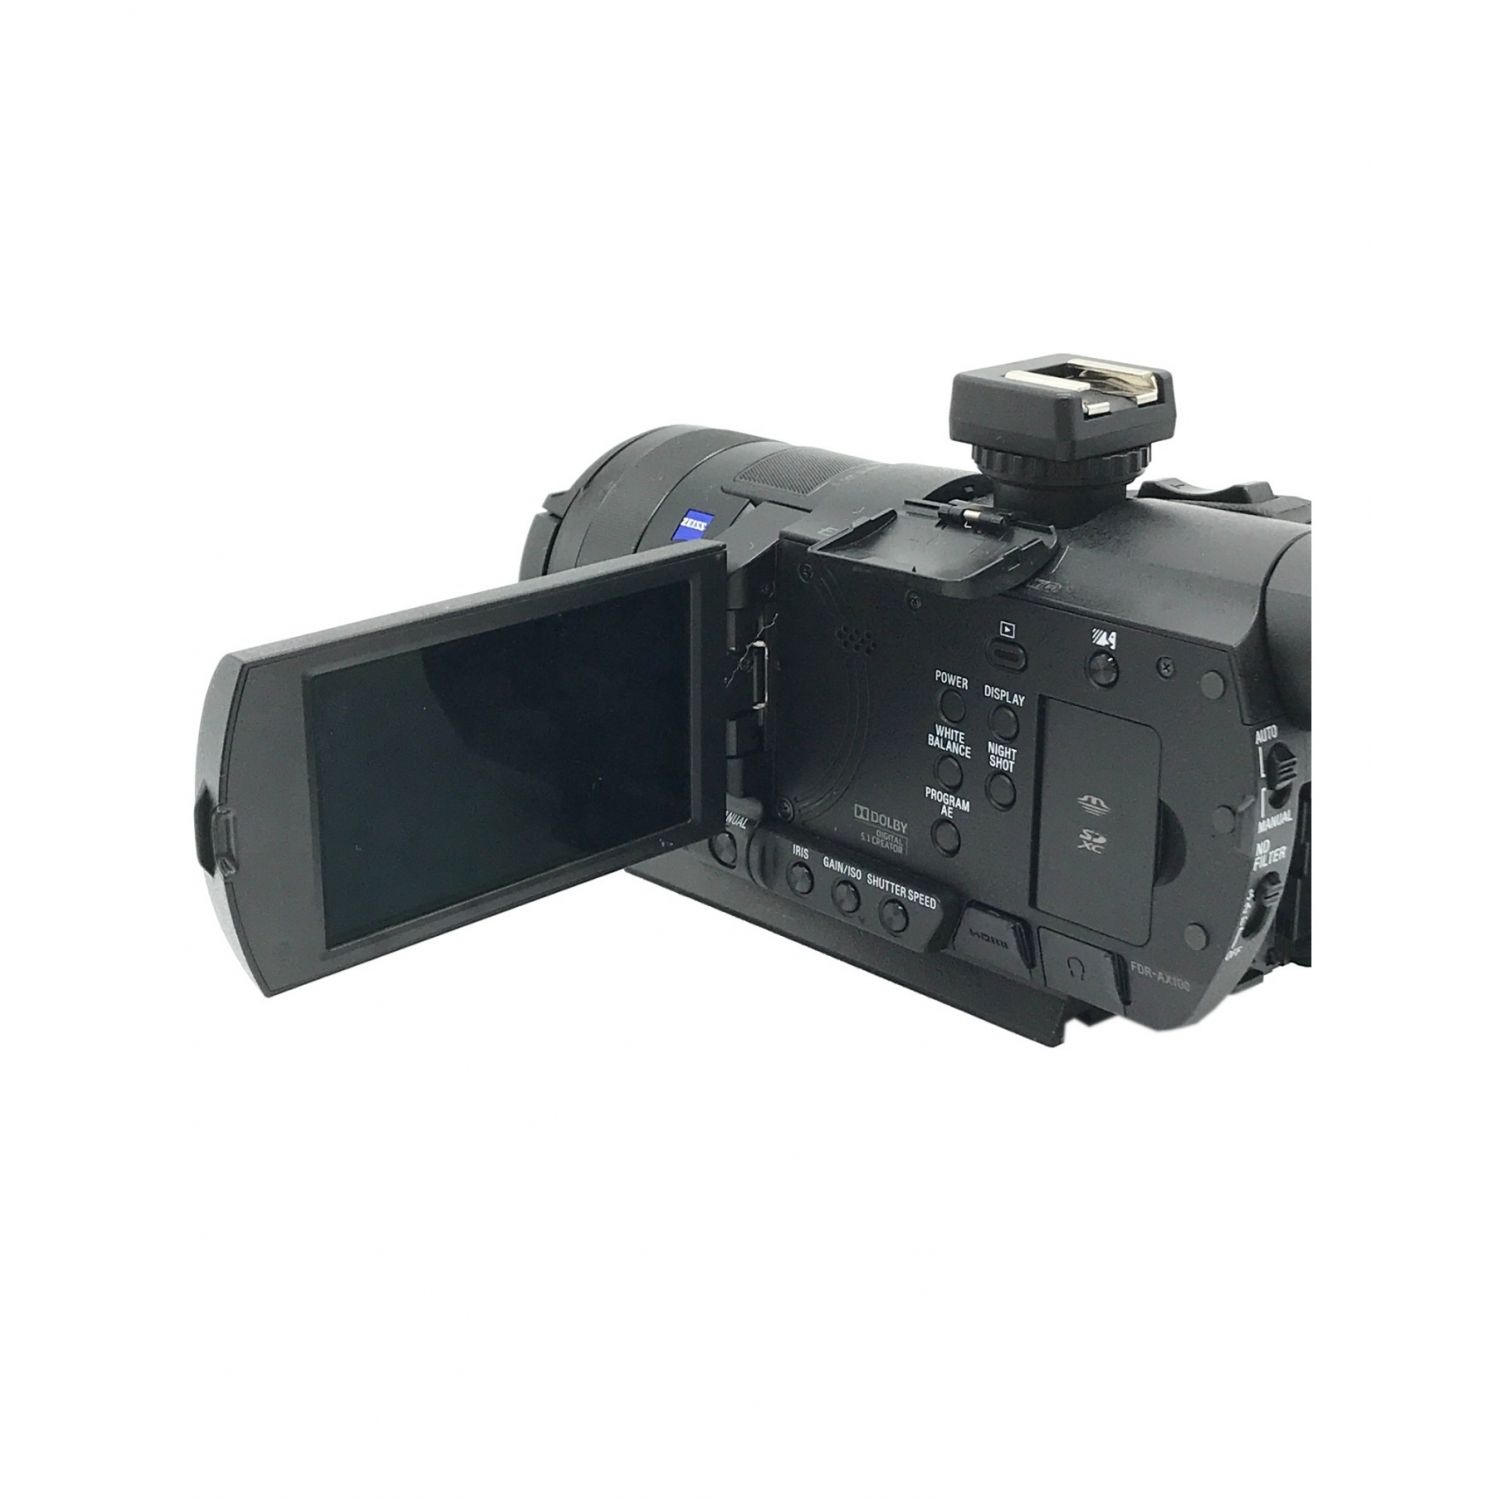 SONY (ソニー) 4K対応デジタルビデオカメラ FDR-AX100 LEDビデオライト 